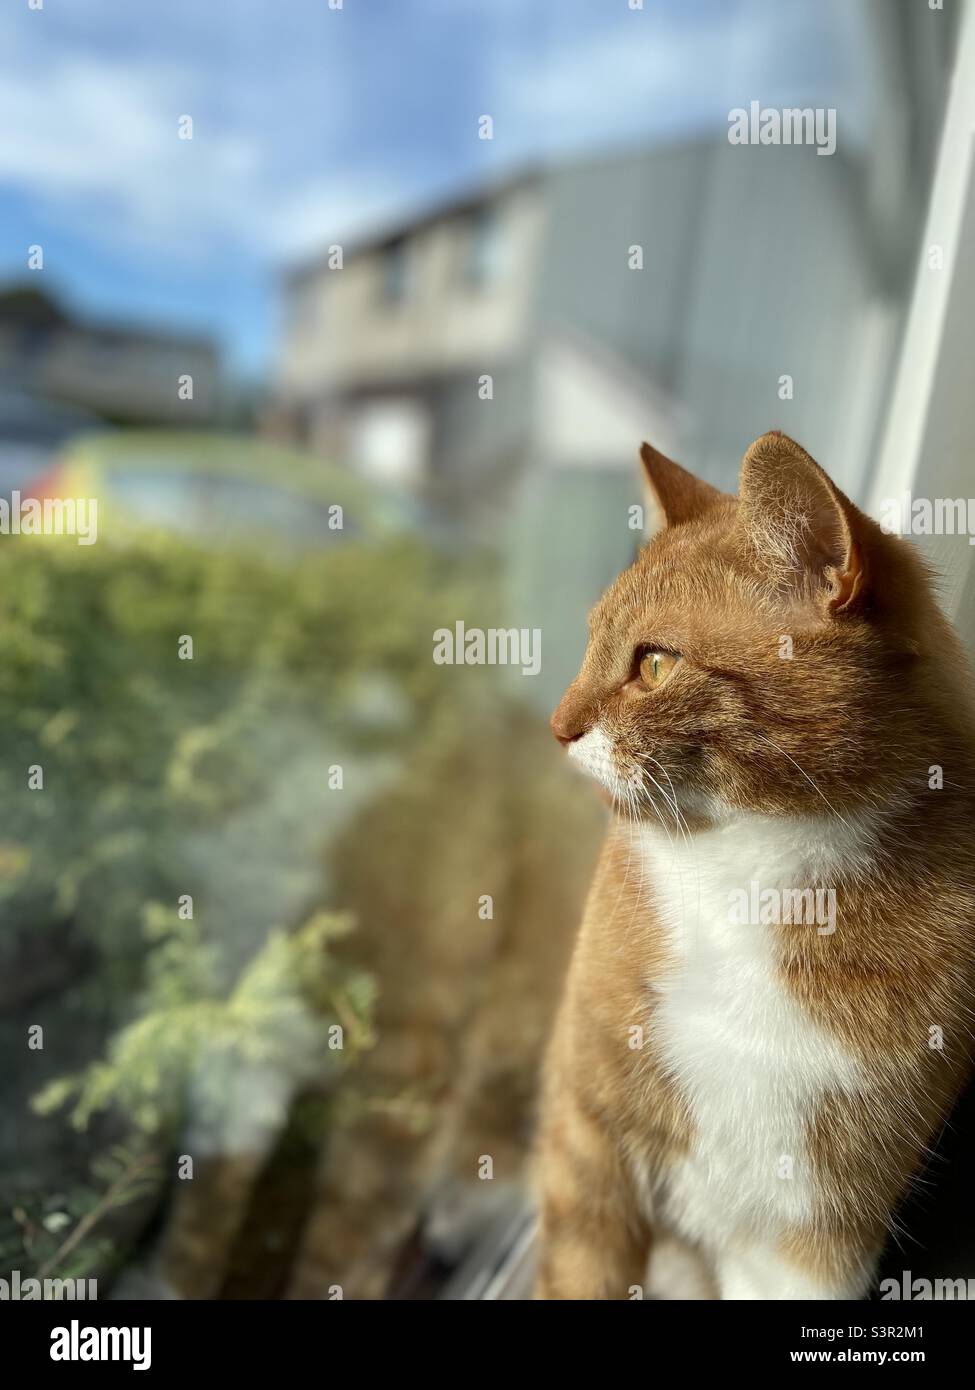 Ginger tabby cat in sun Stock Photo